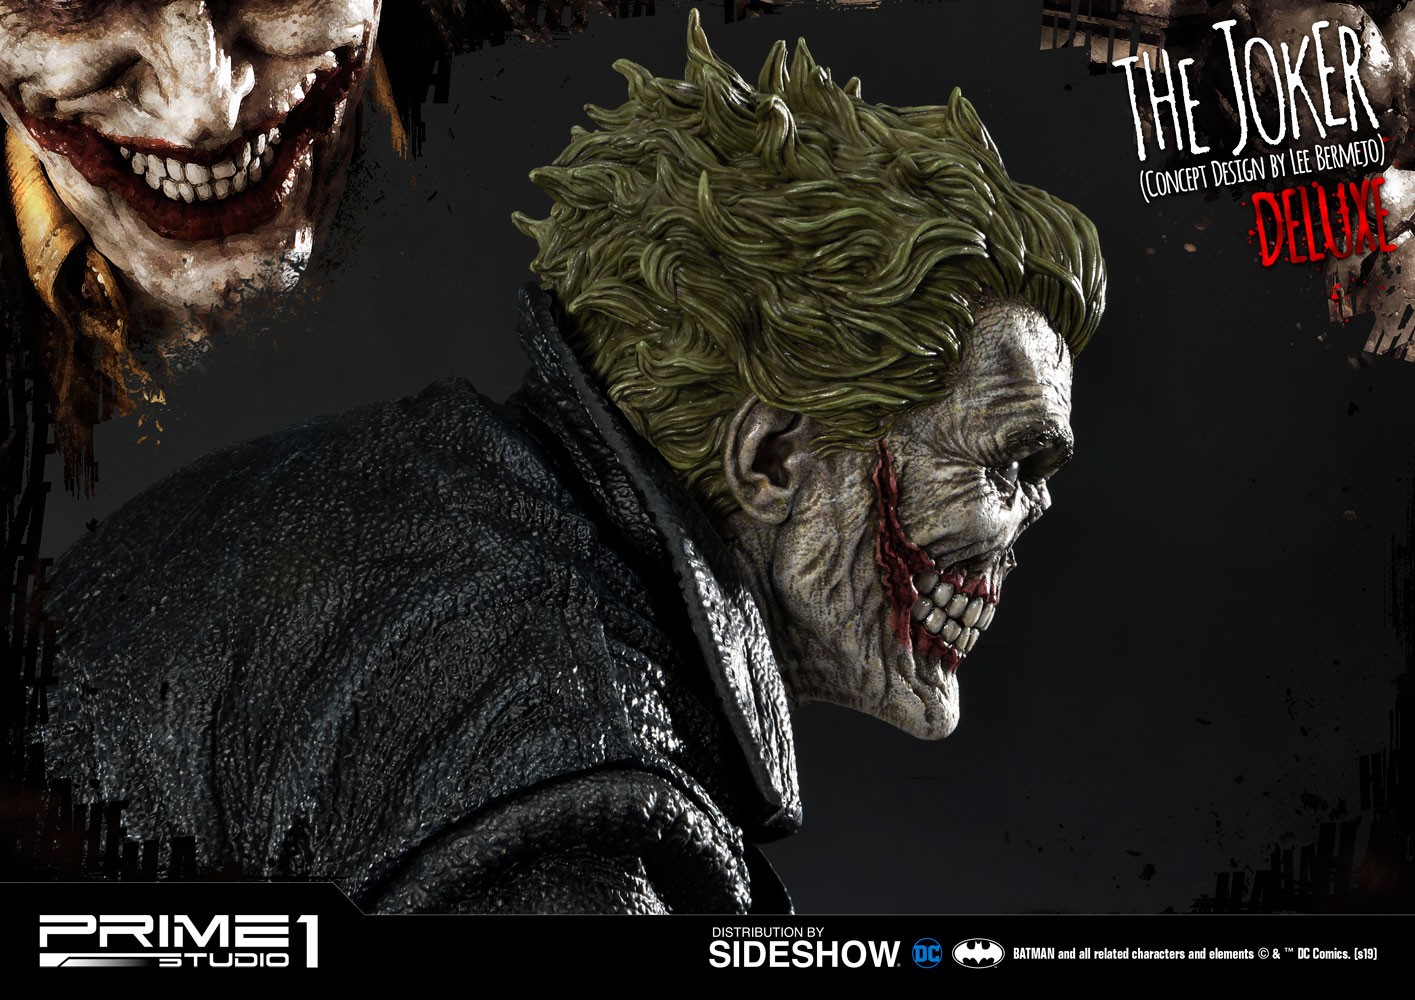 The Joker Deluxe Version (Concept Design by Lee Bermejo) (Prototype Shown) View 4